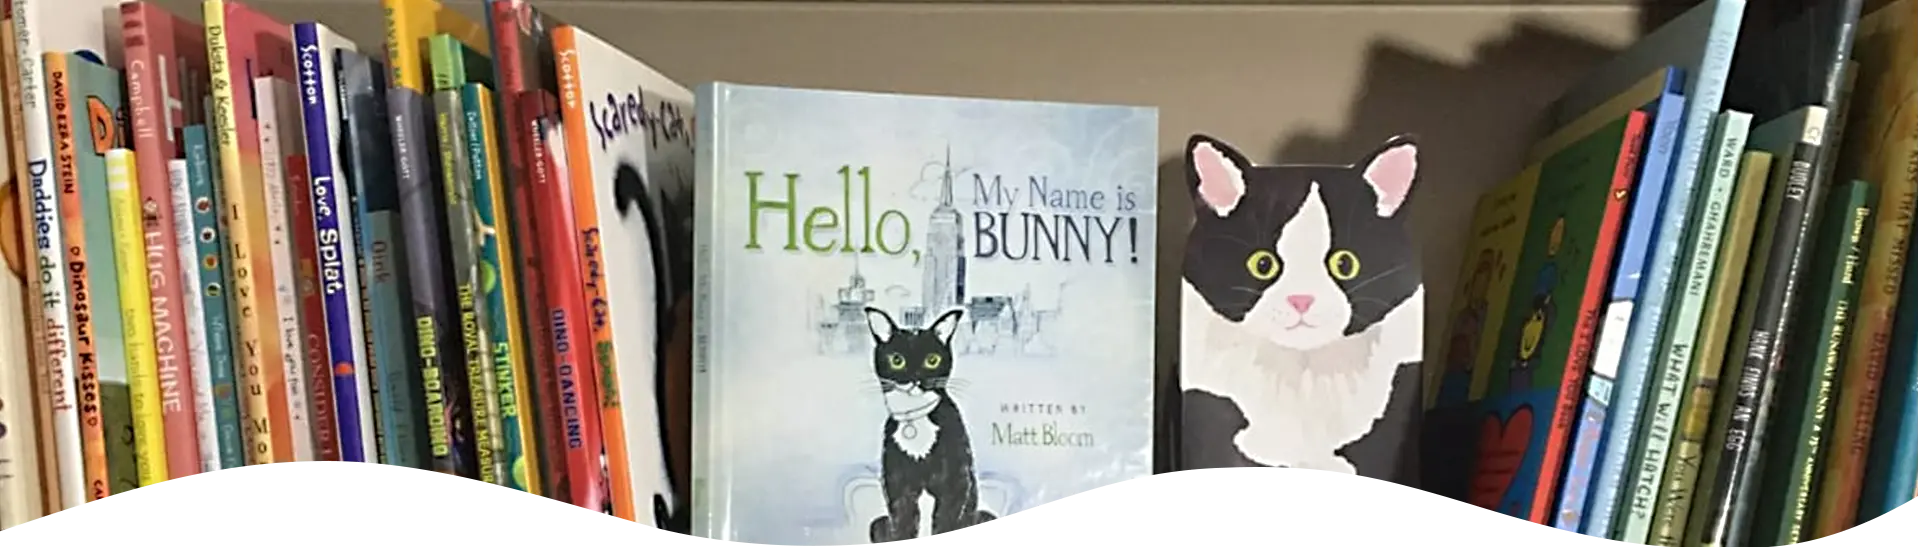 Hello My Name is Bunny London, Award Winning Childrens Book Series Bookshelf